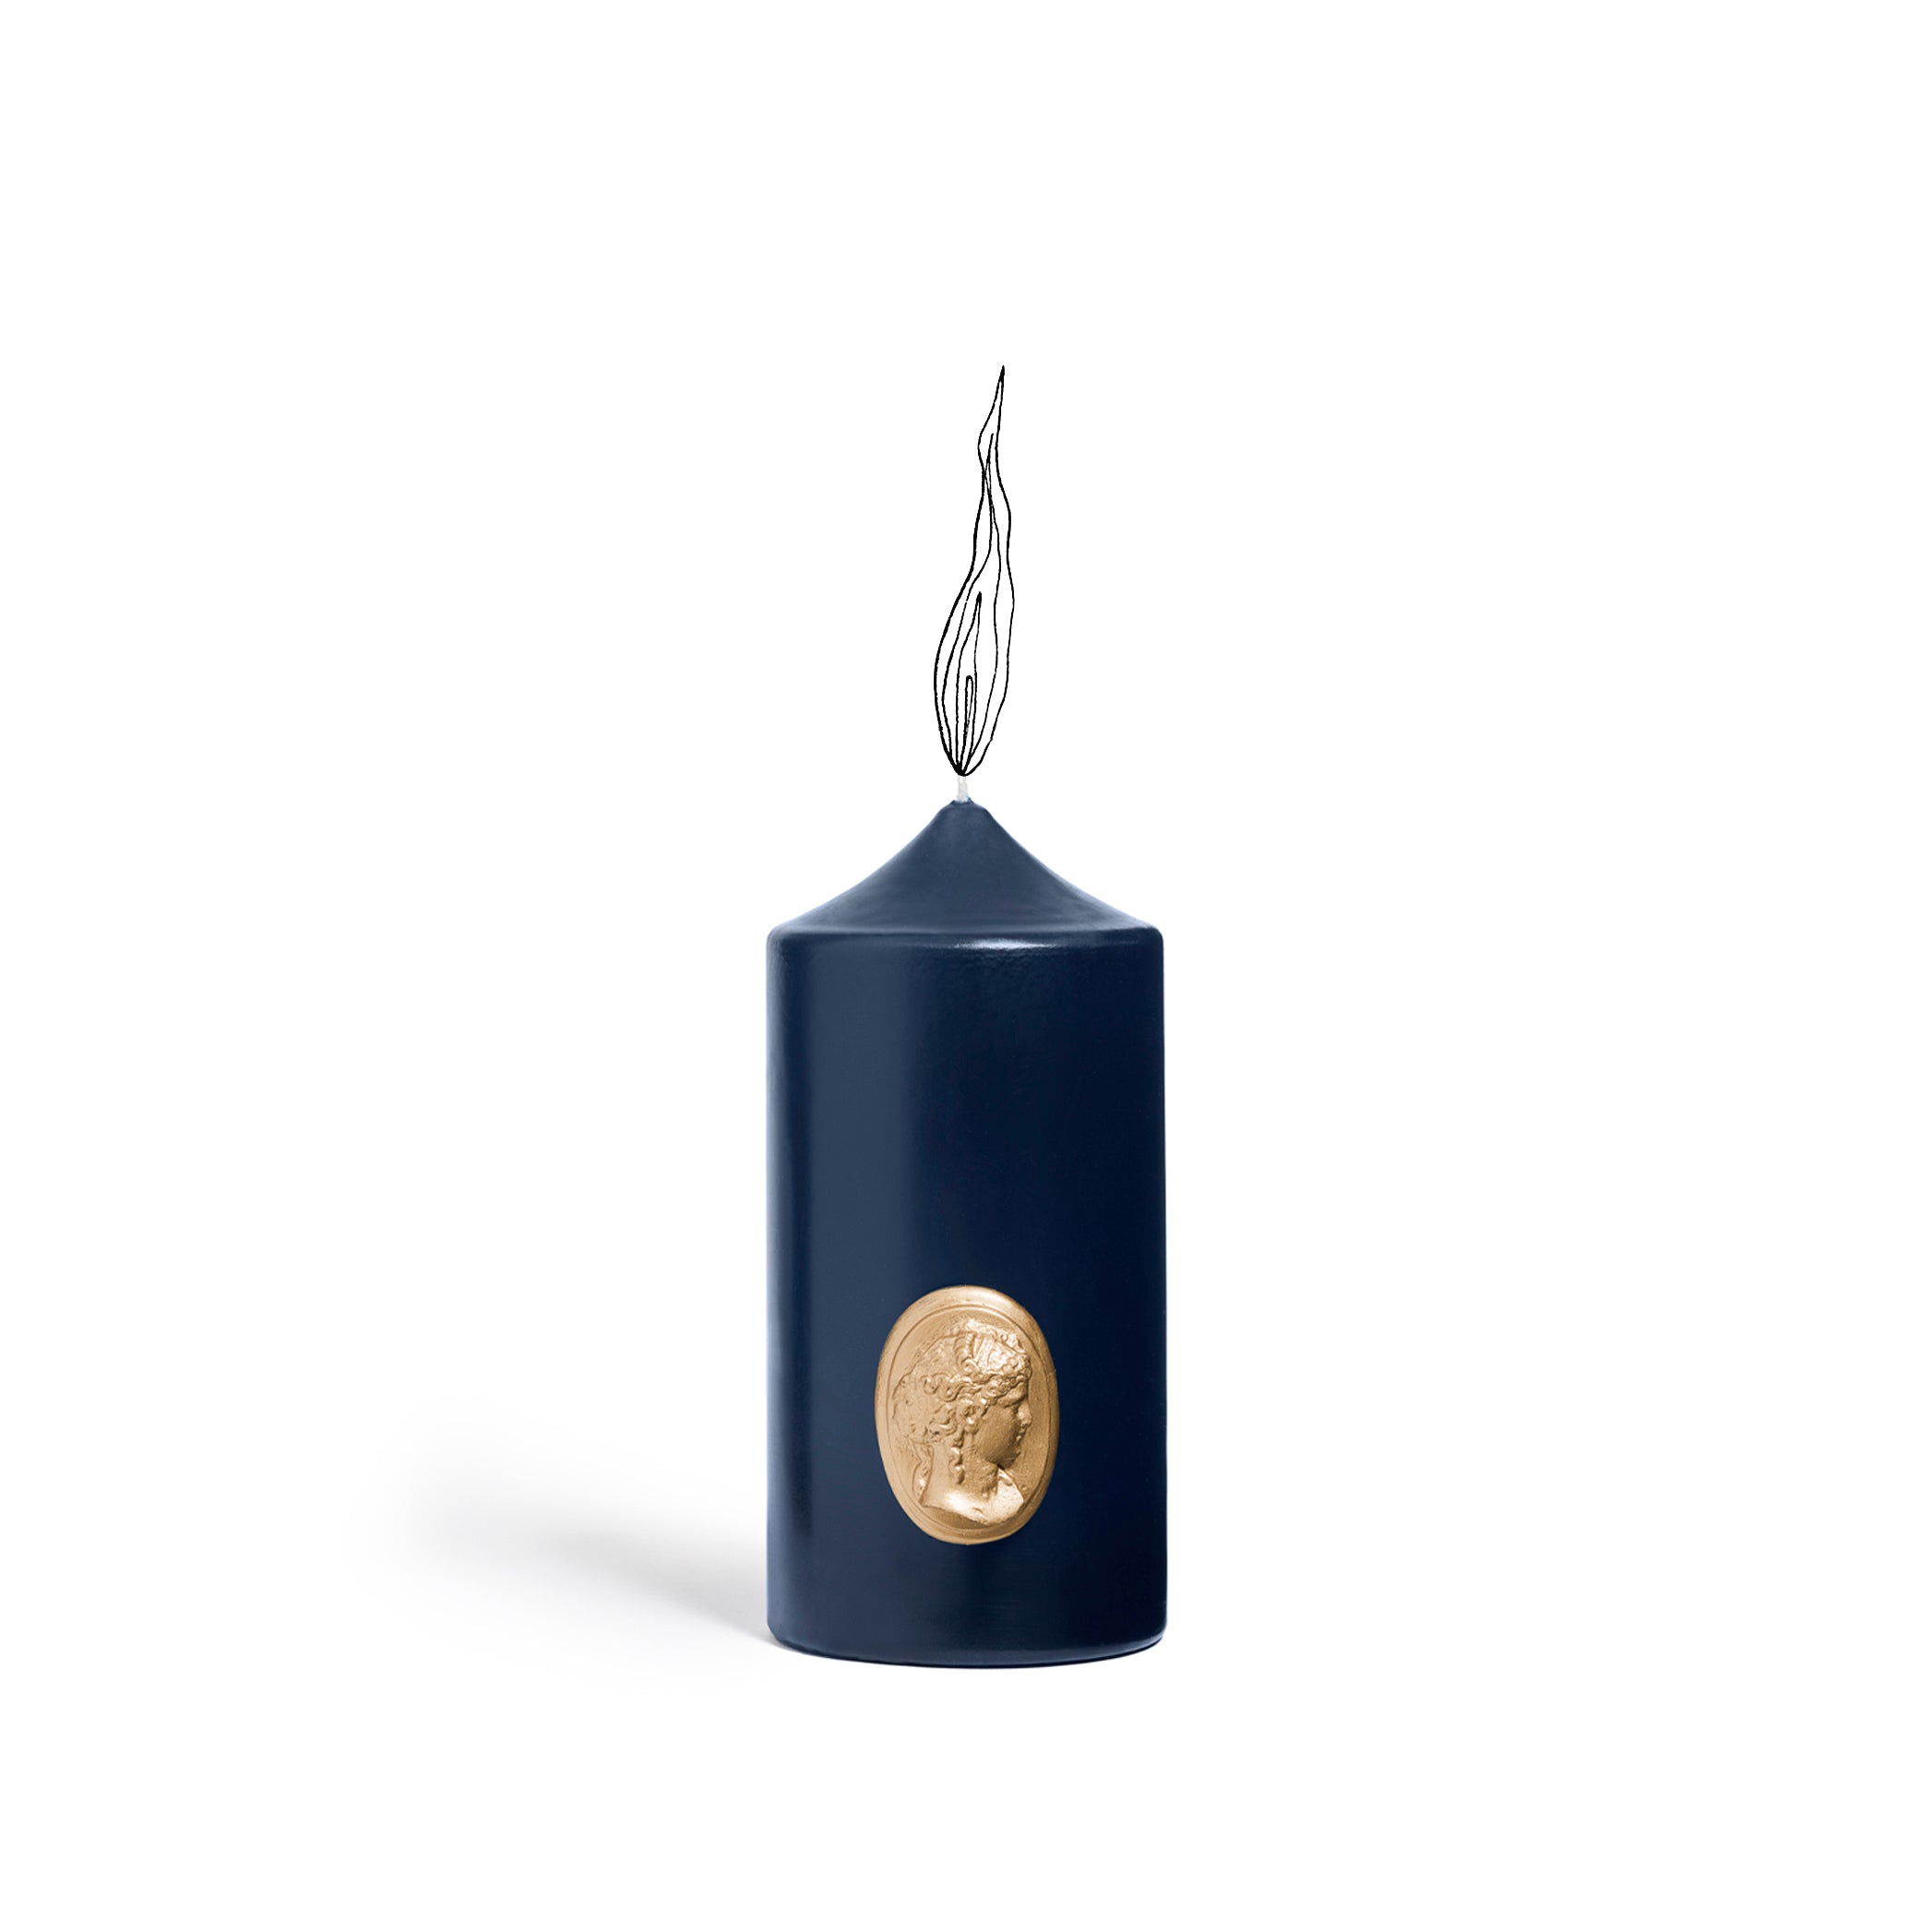 'Madame de Pompadour' Cameo Pillar Candle in Navy Blue, 15cm by Trudon